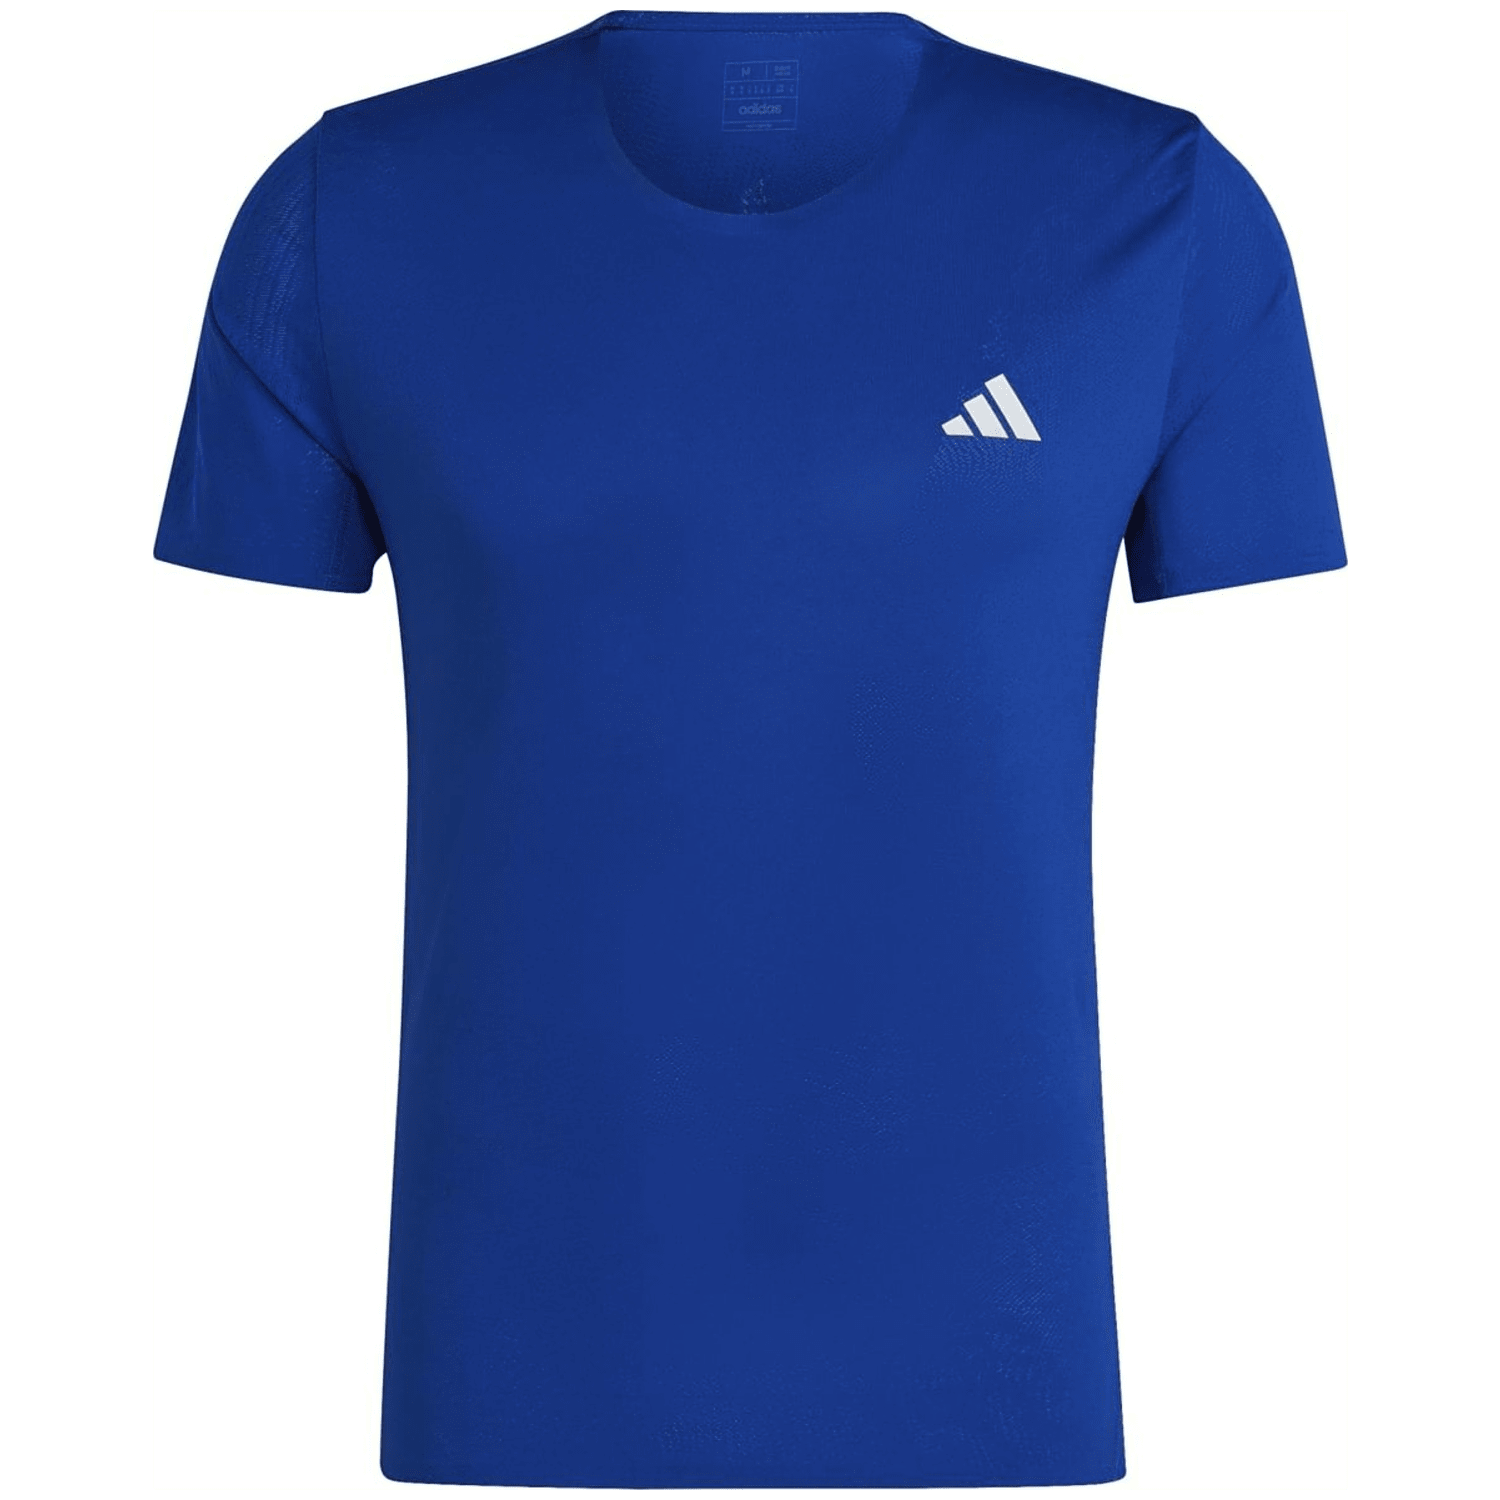 Adidas Adizero T-Shirt Herren